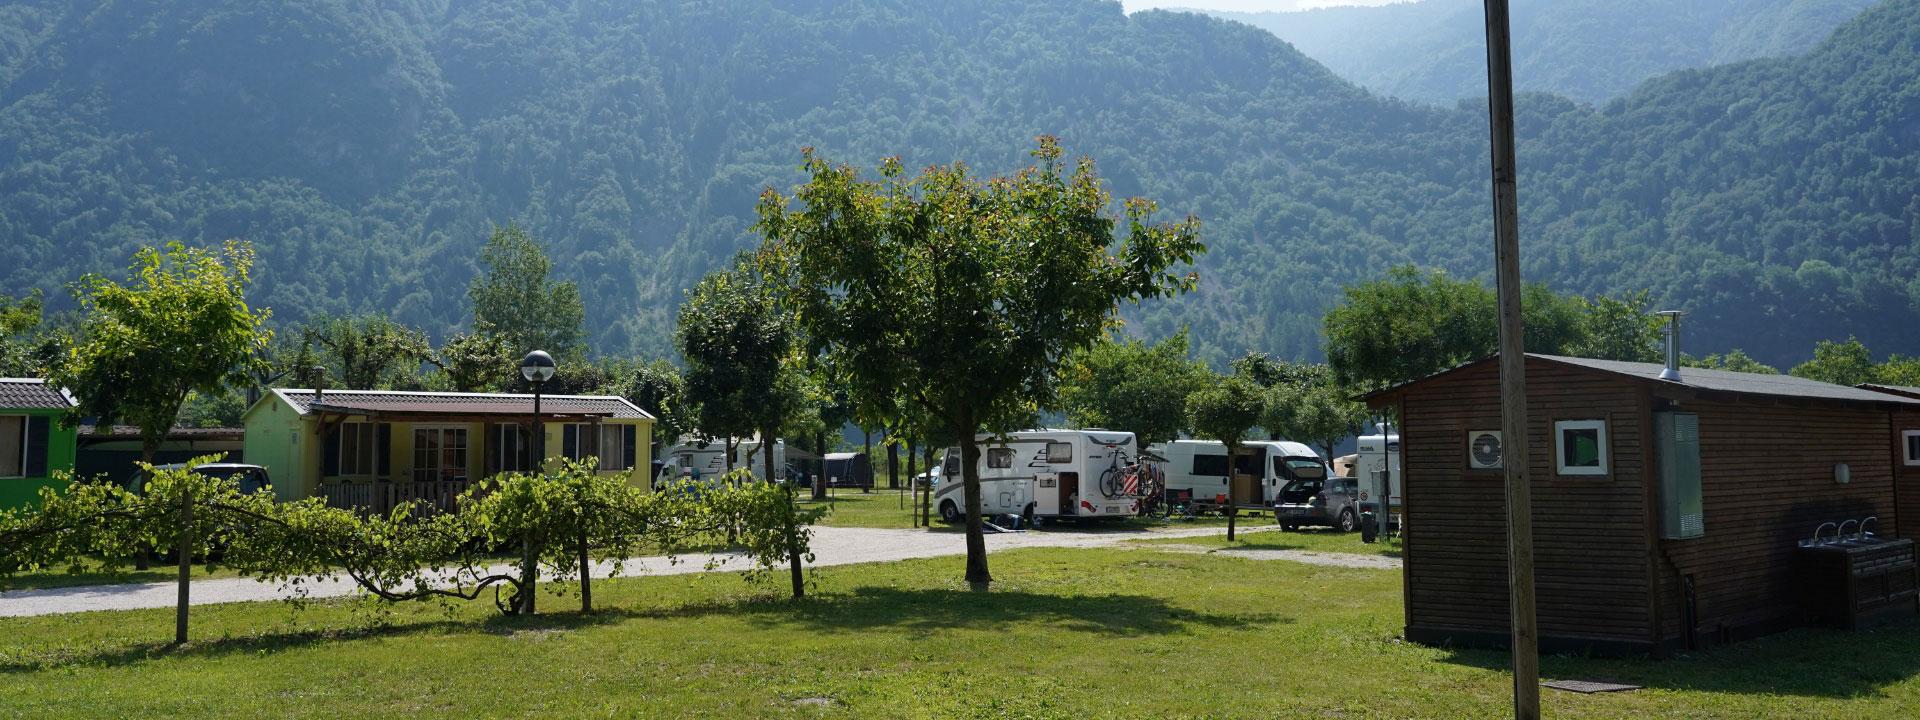 campinglago de angebot-granfondo-campingplatz-fuer-radfahrer-in-den-dolomiten 005